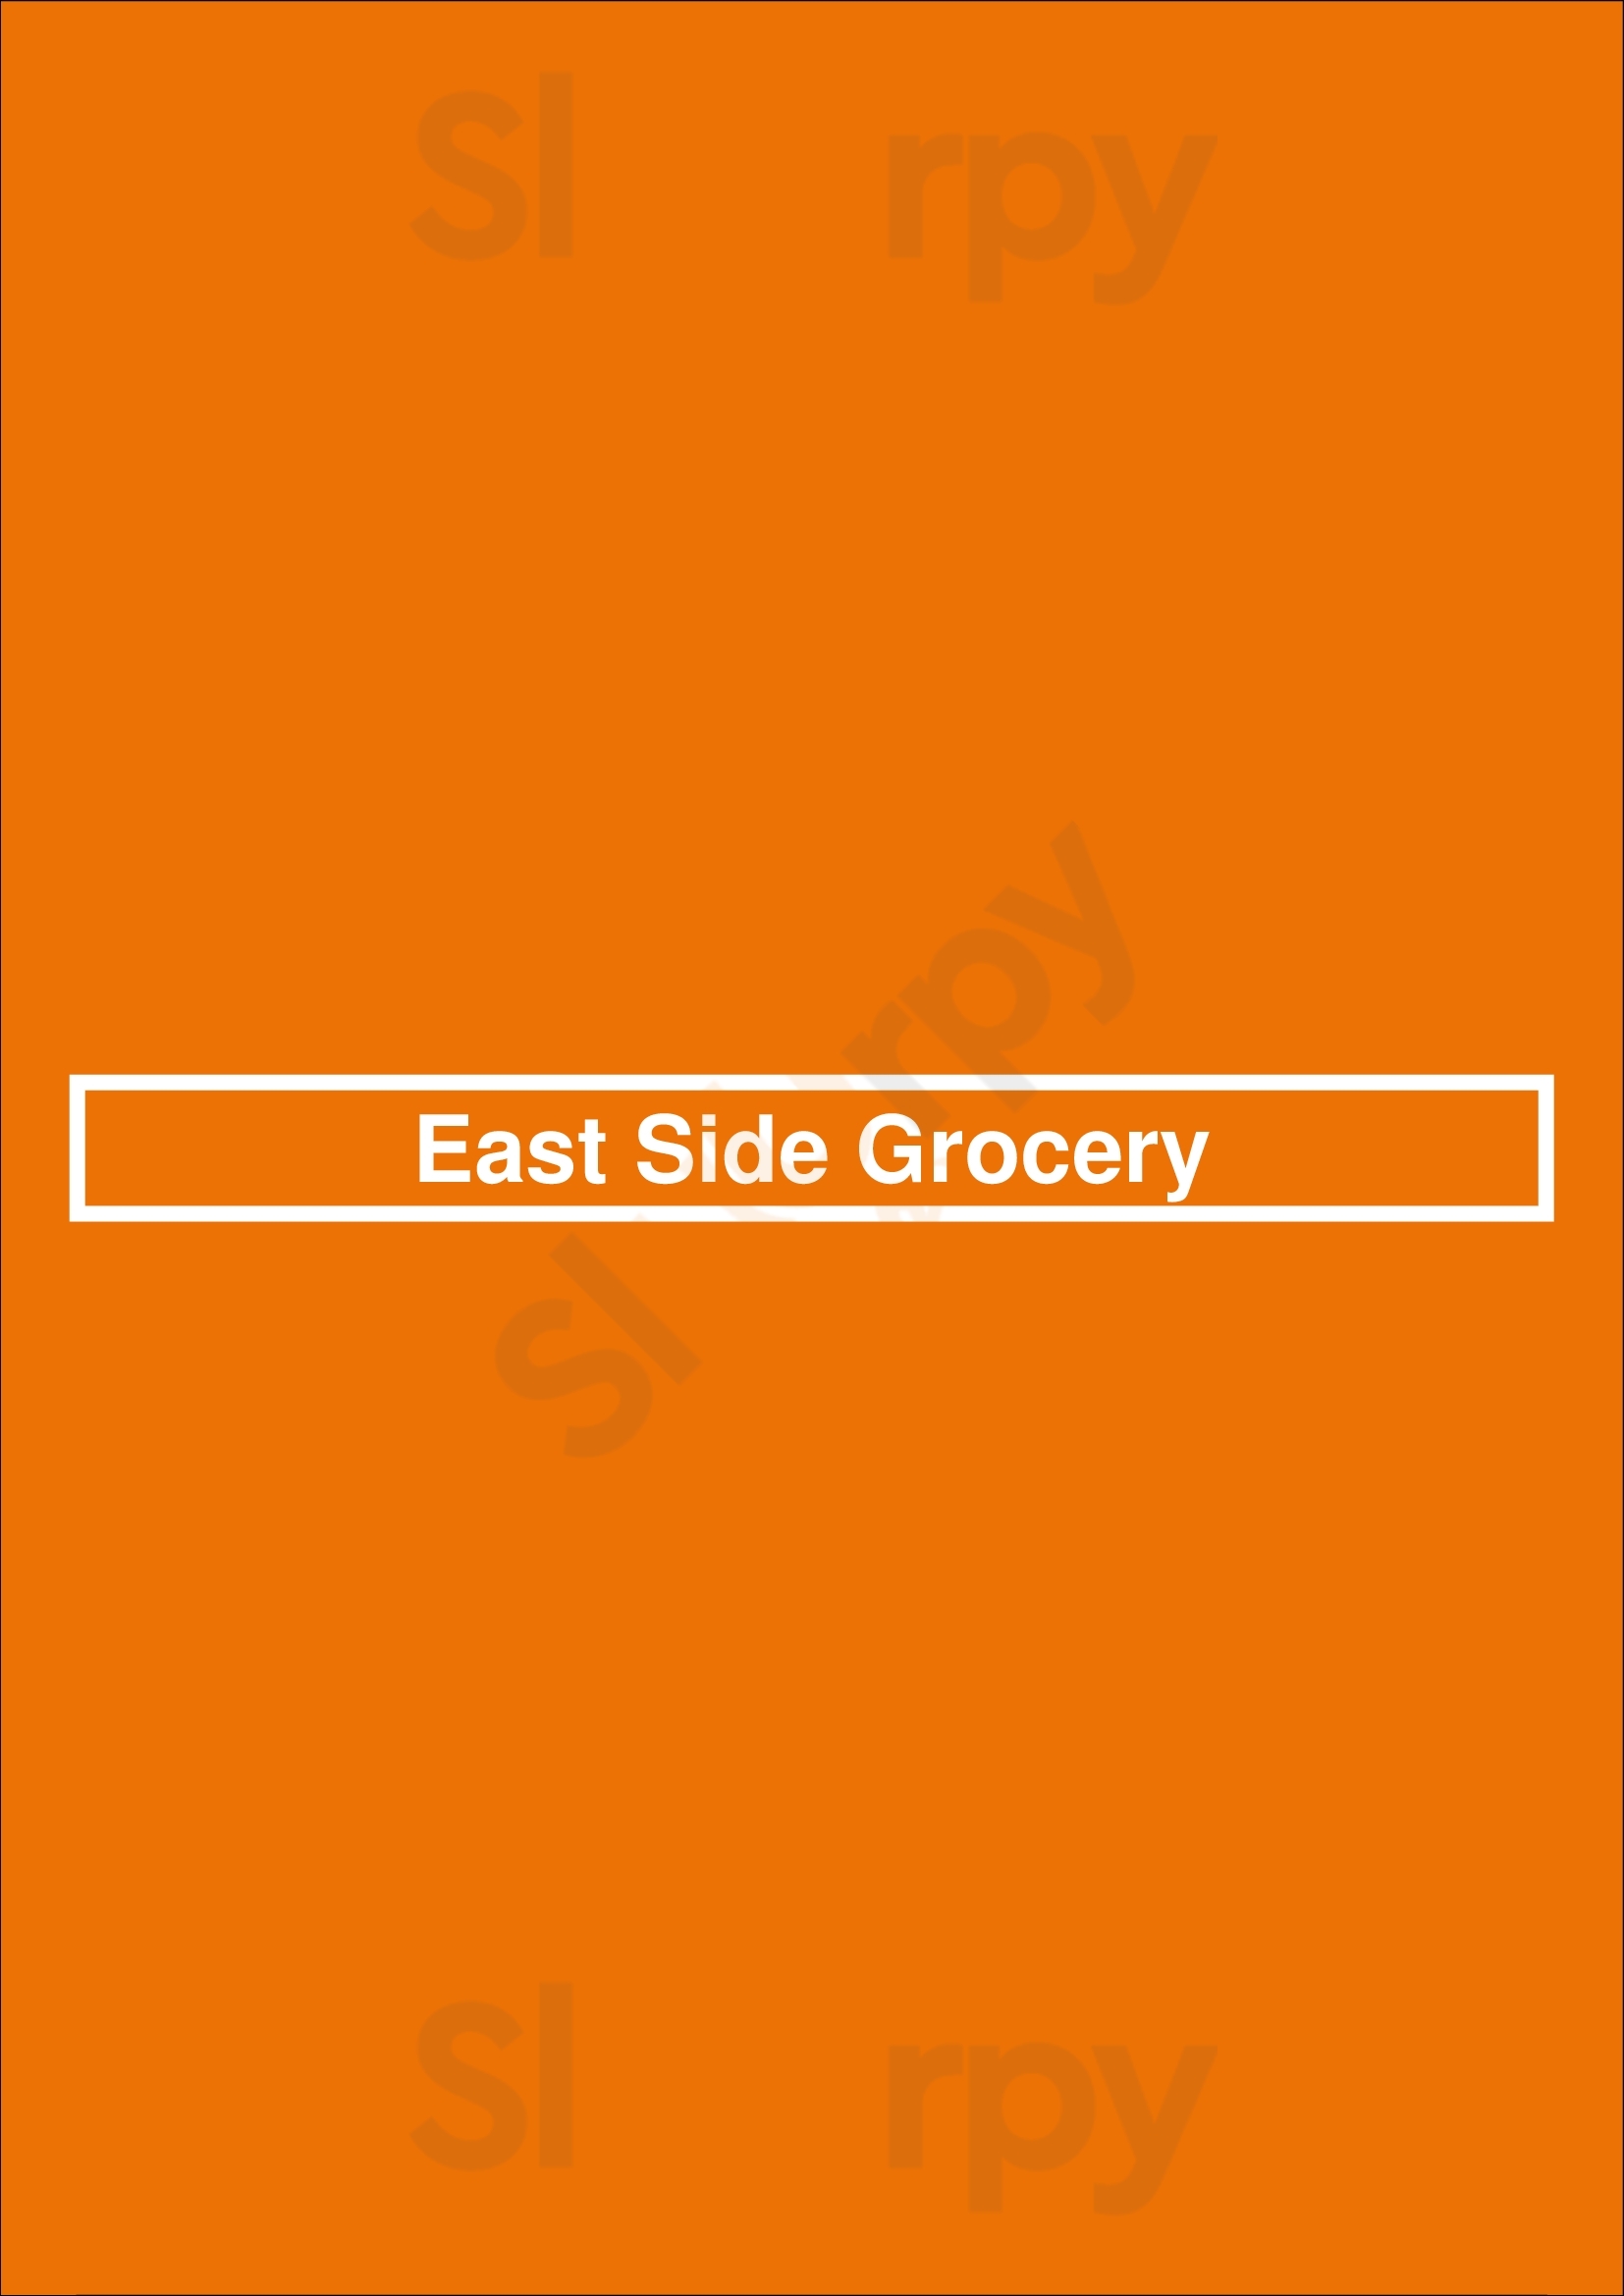 East Side Grocery New York City Menu - 1